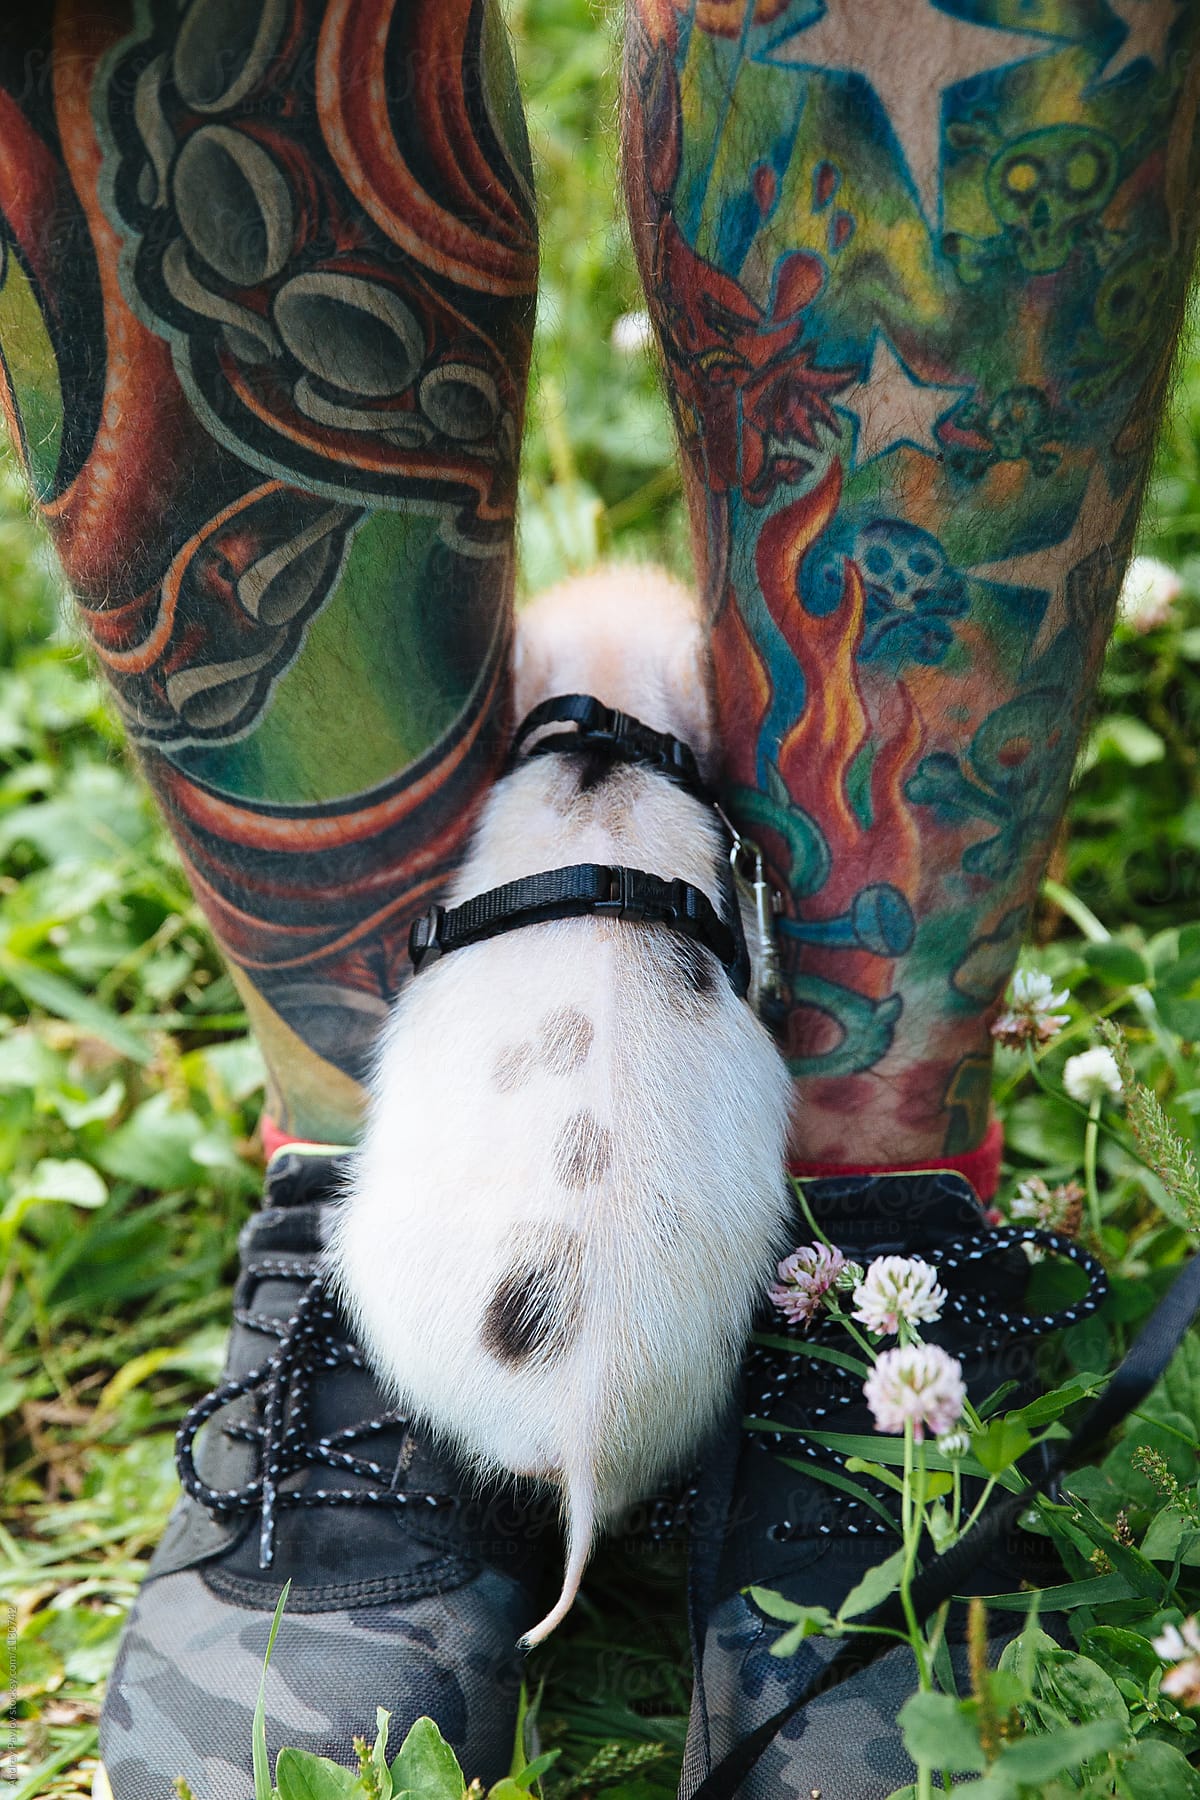 Adorable minipig walking through male tattooed legs